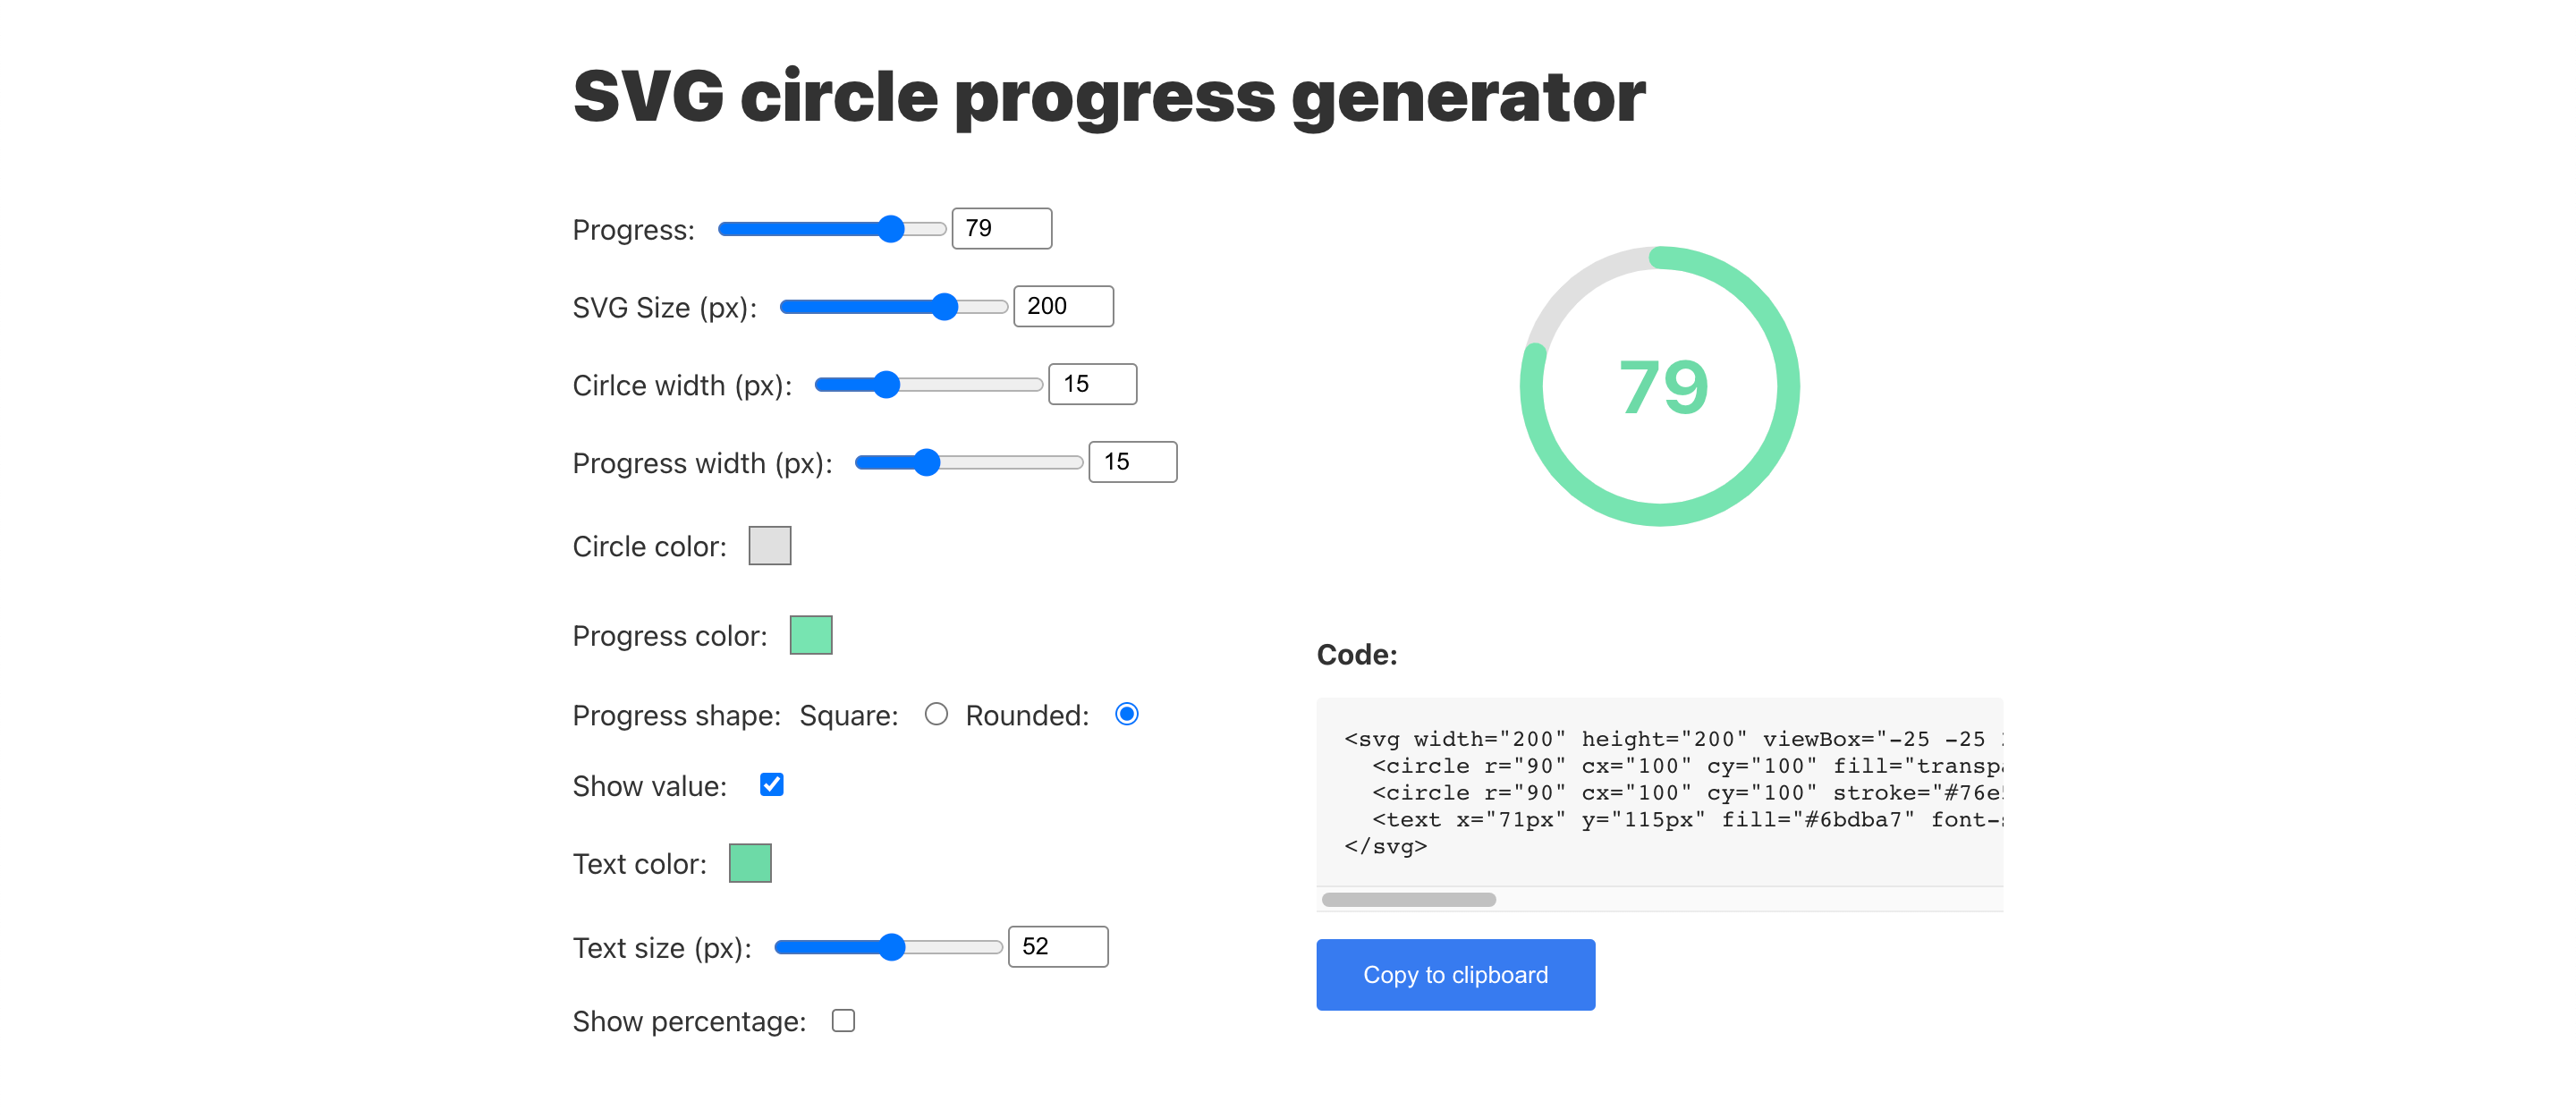 SVG circle progress generator tool